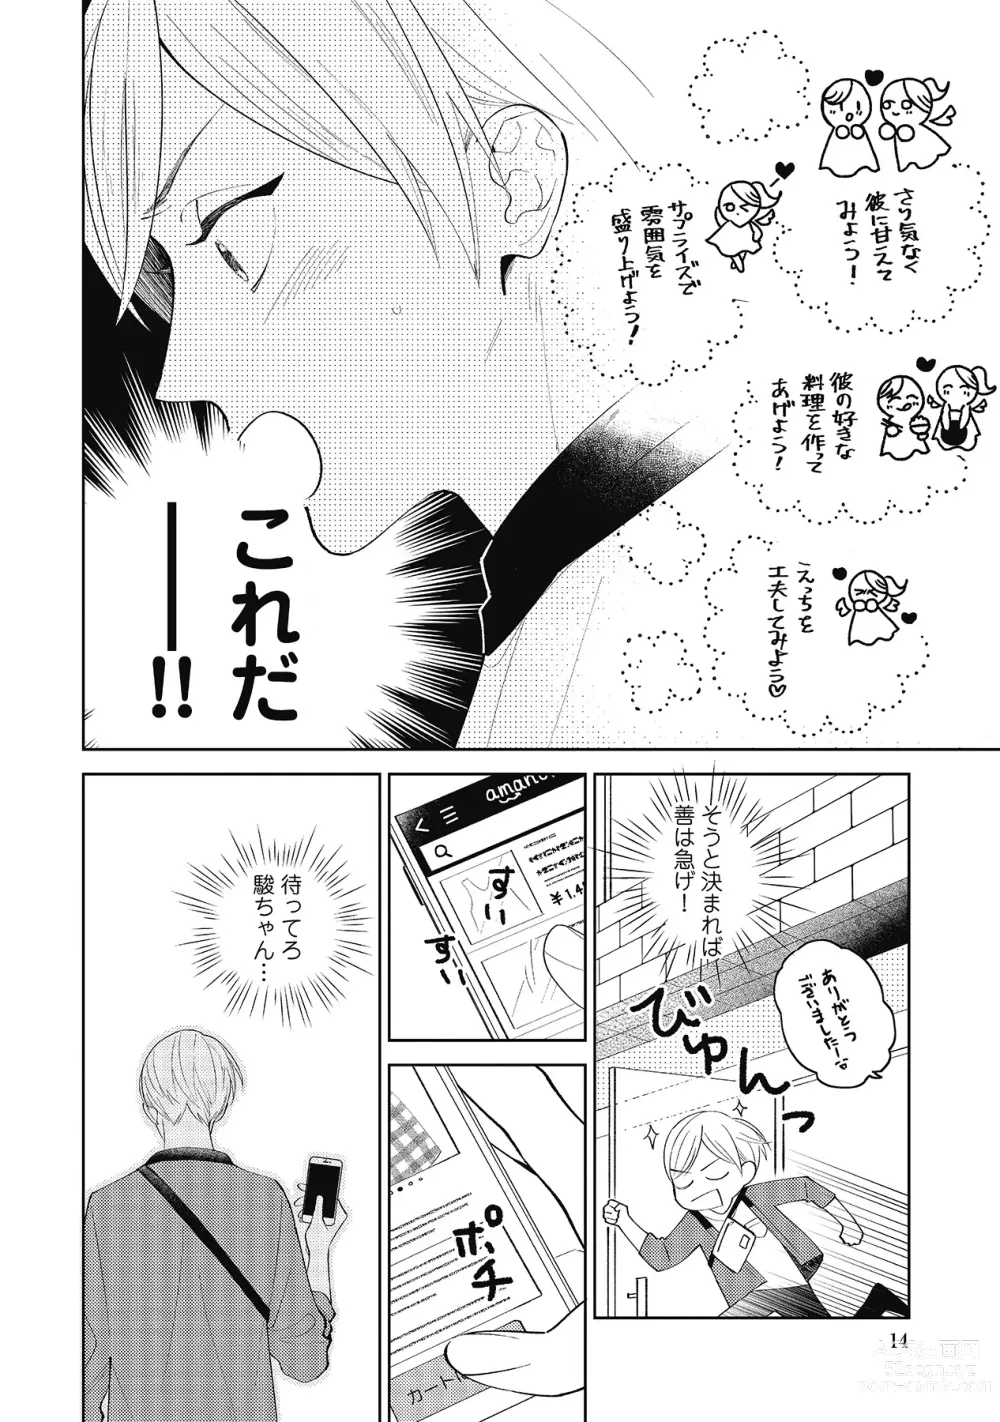 Page 14 of manga Sentimental Darling